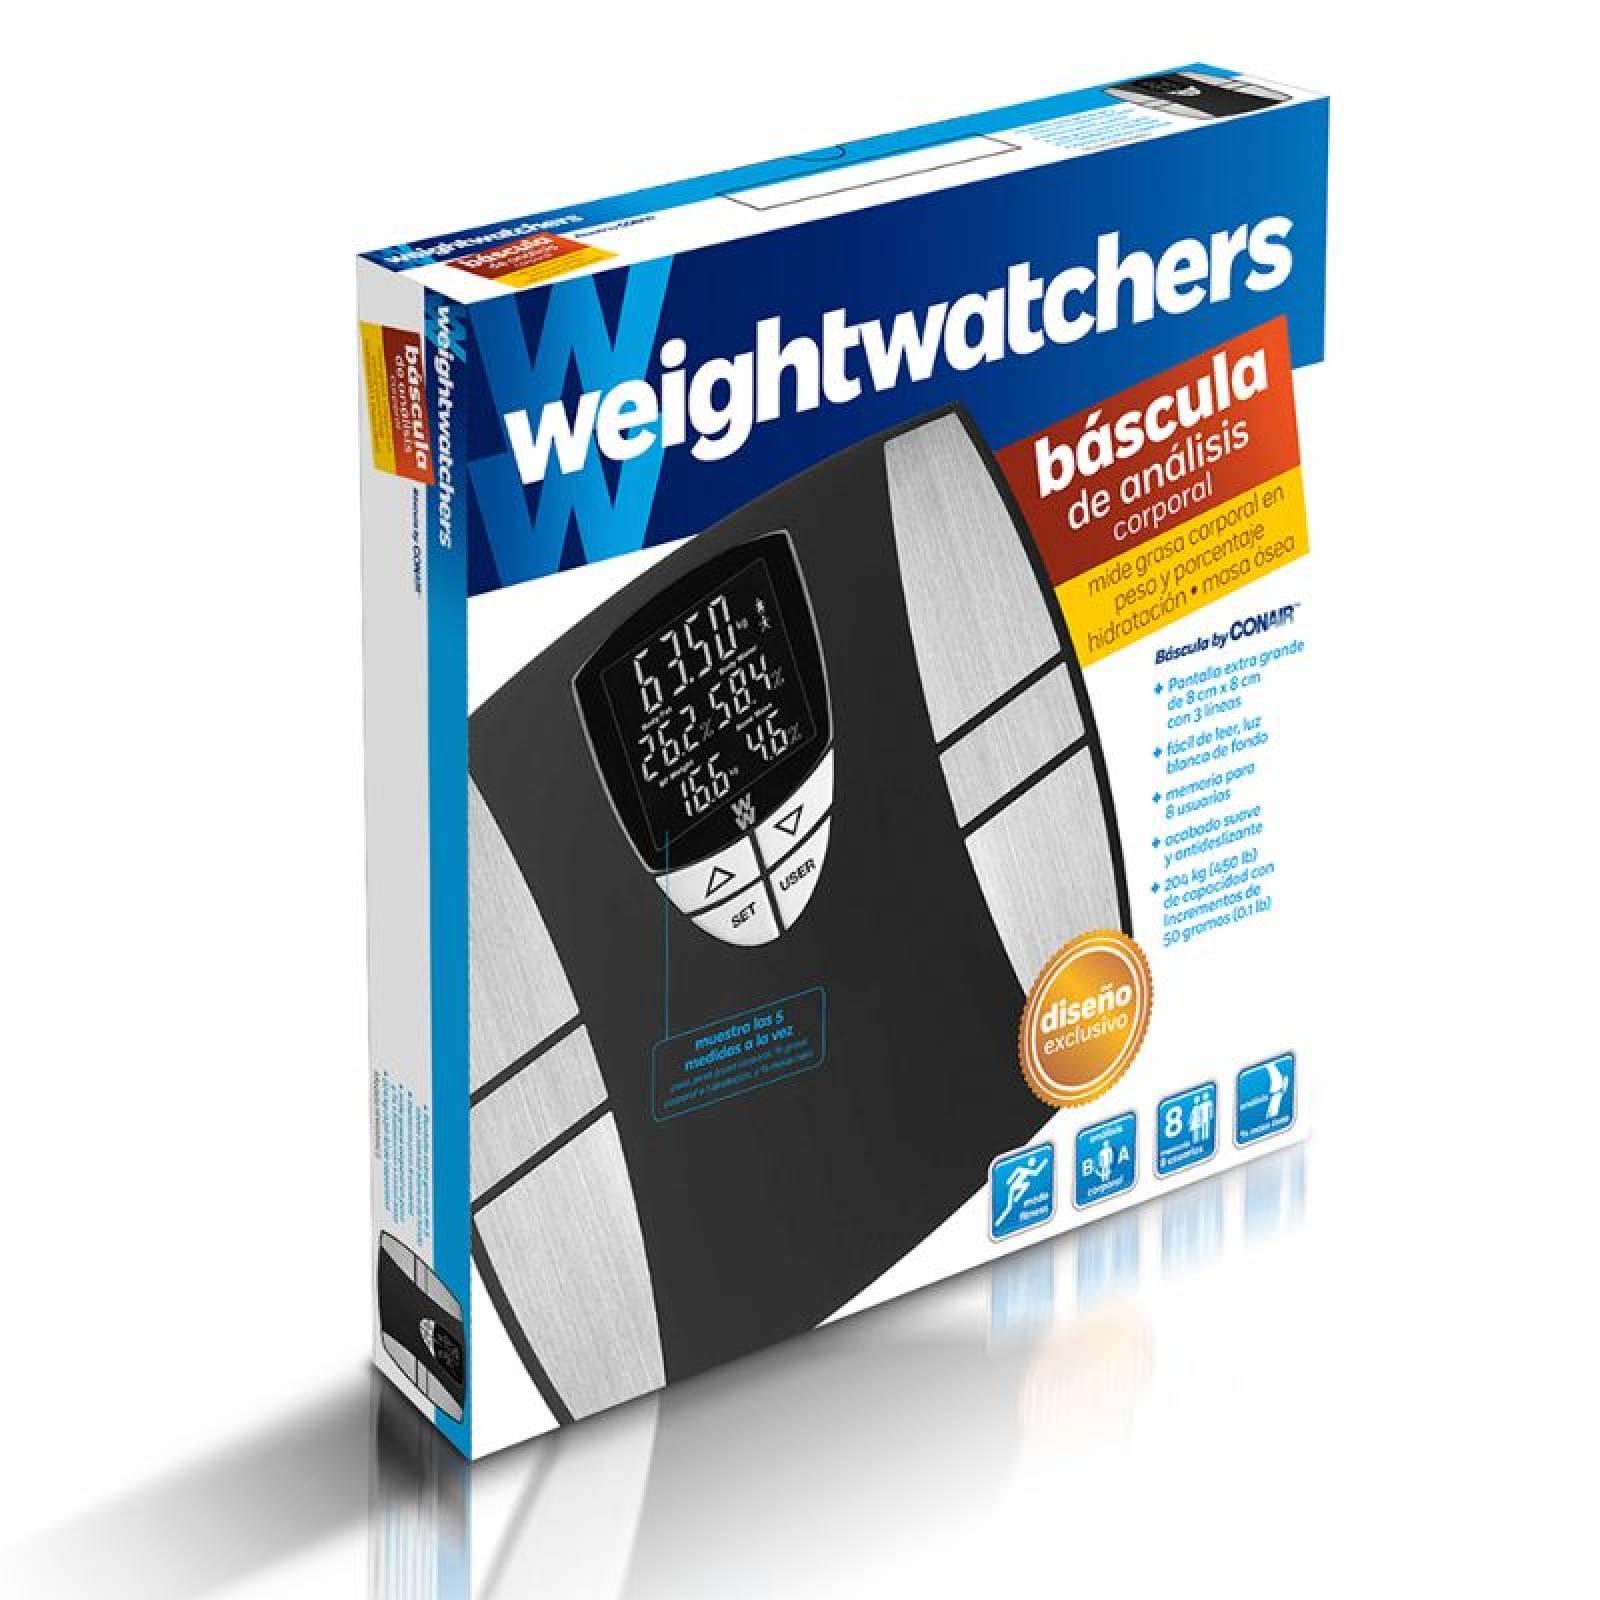 Weight Watchers bascula de cristal con análisis WW800ES MX